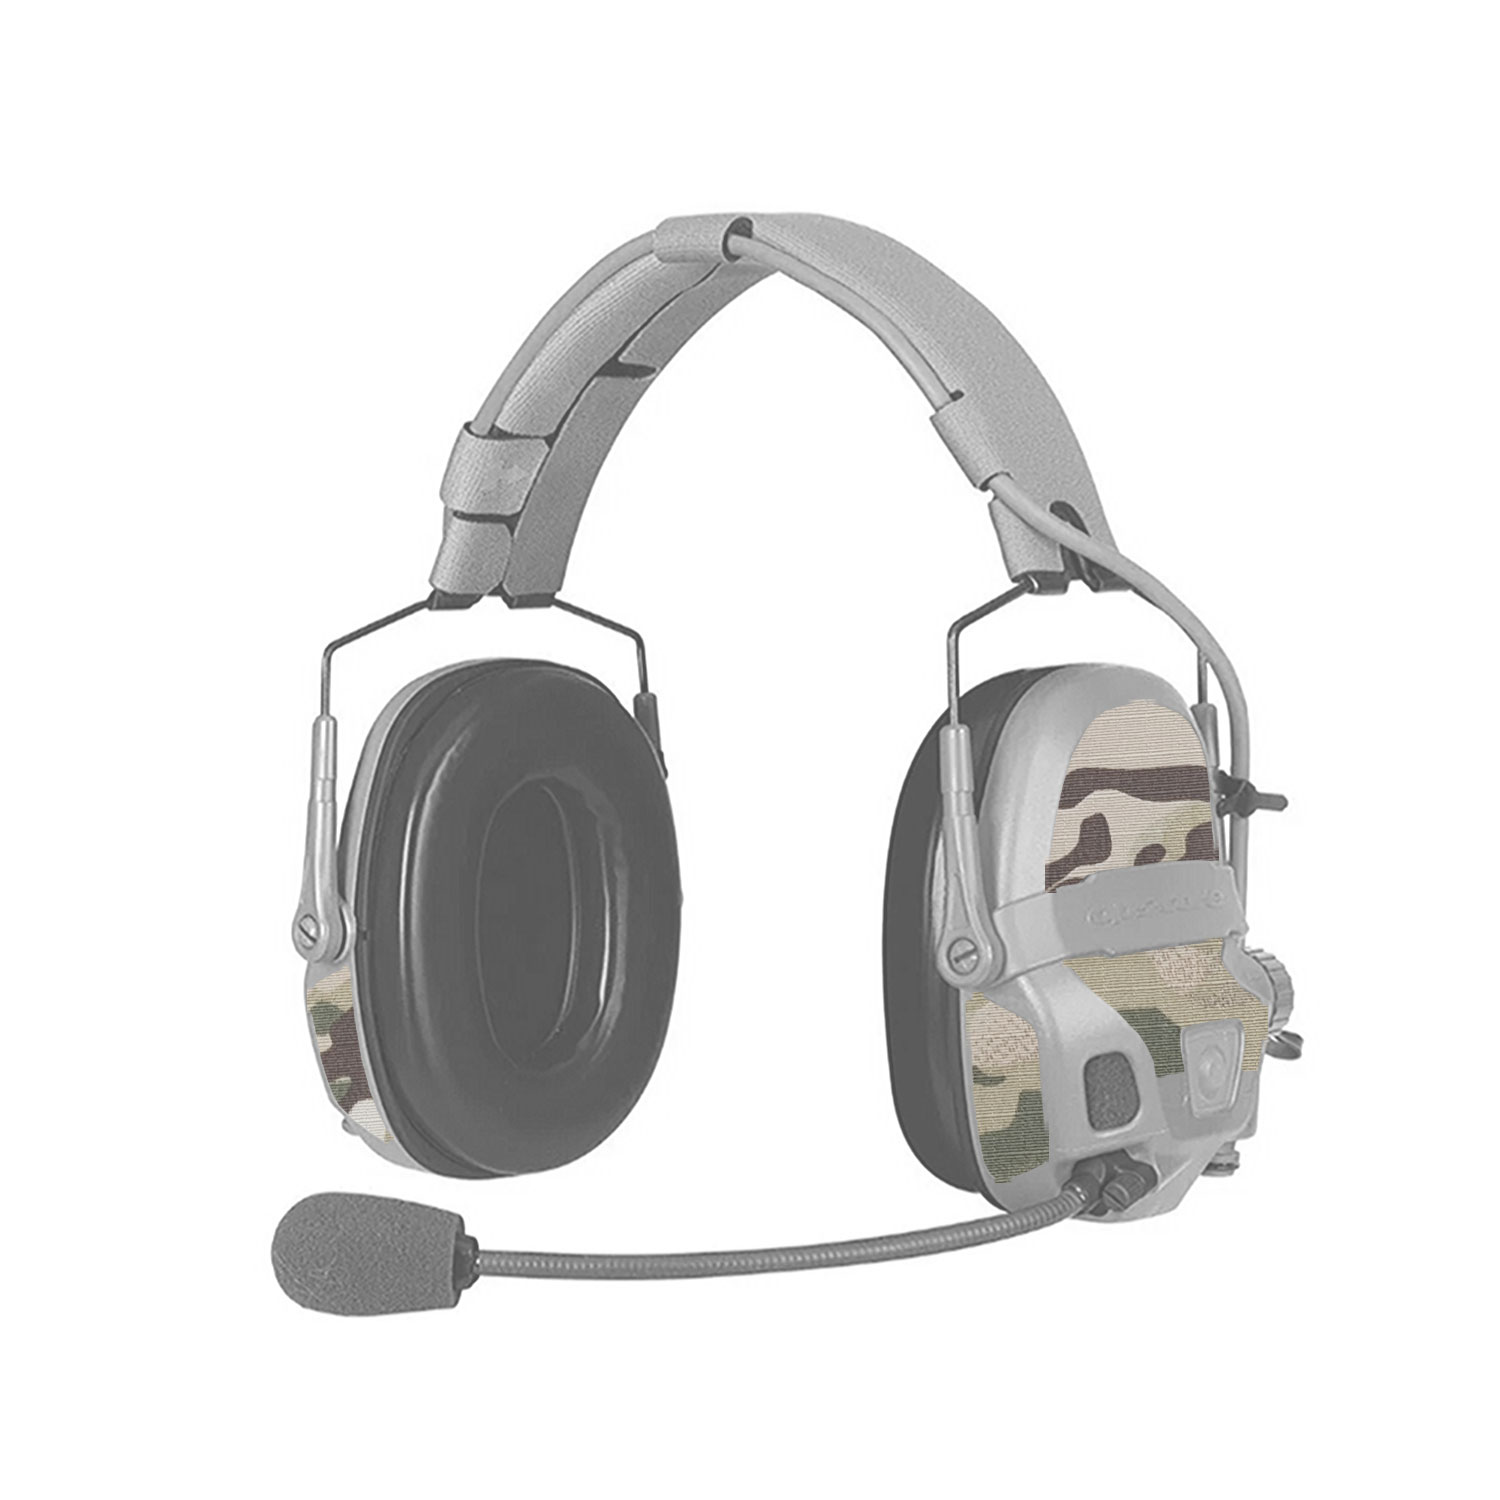 amp-headset-vcamo-2